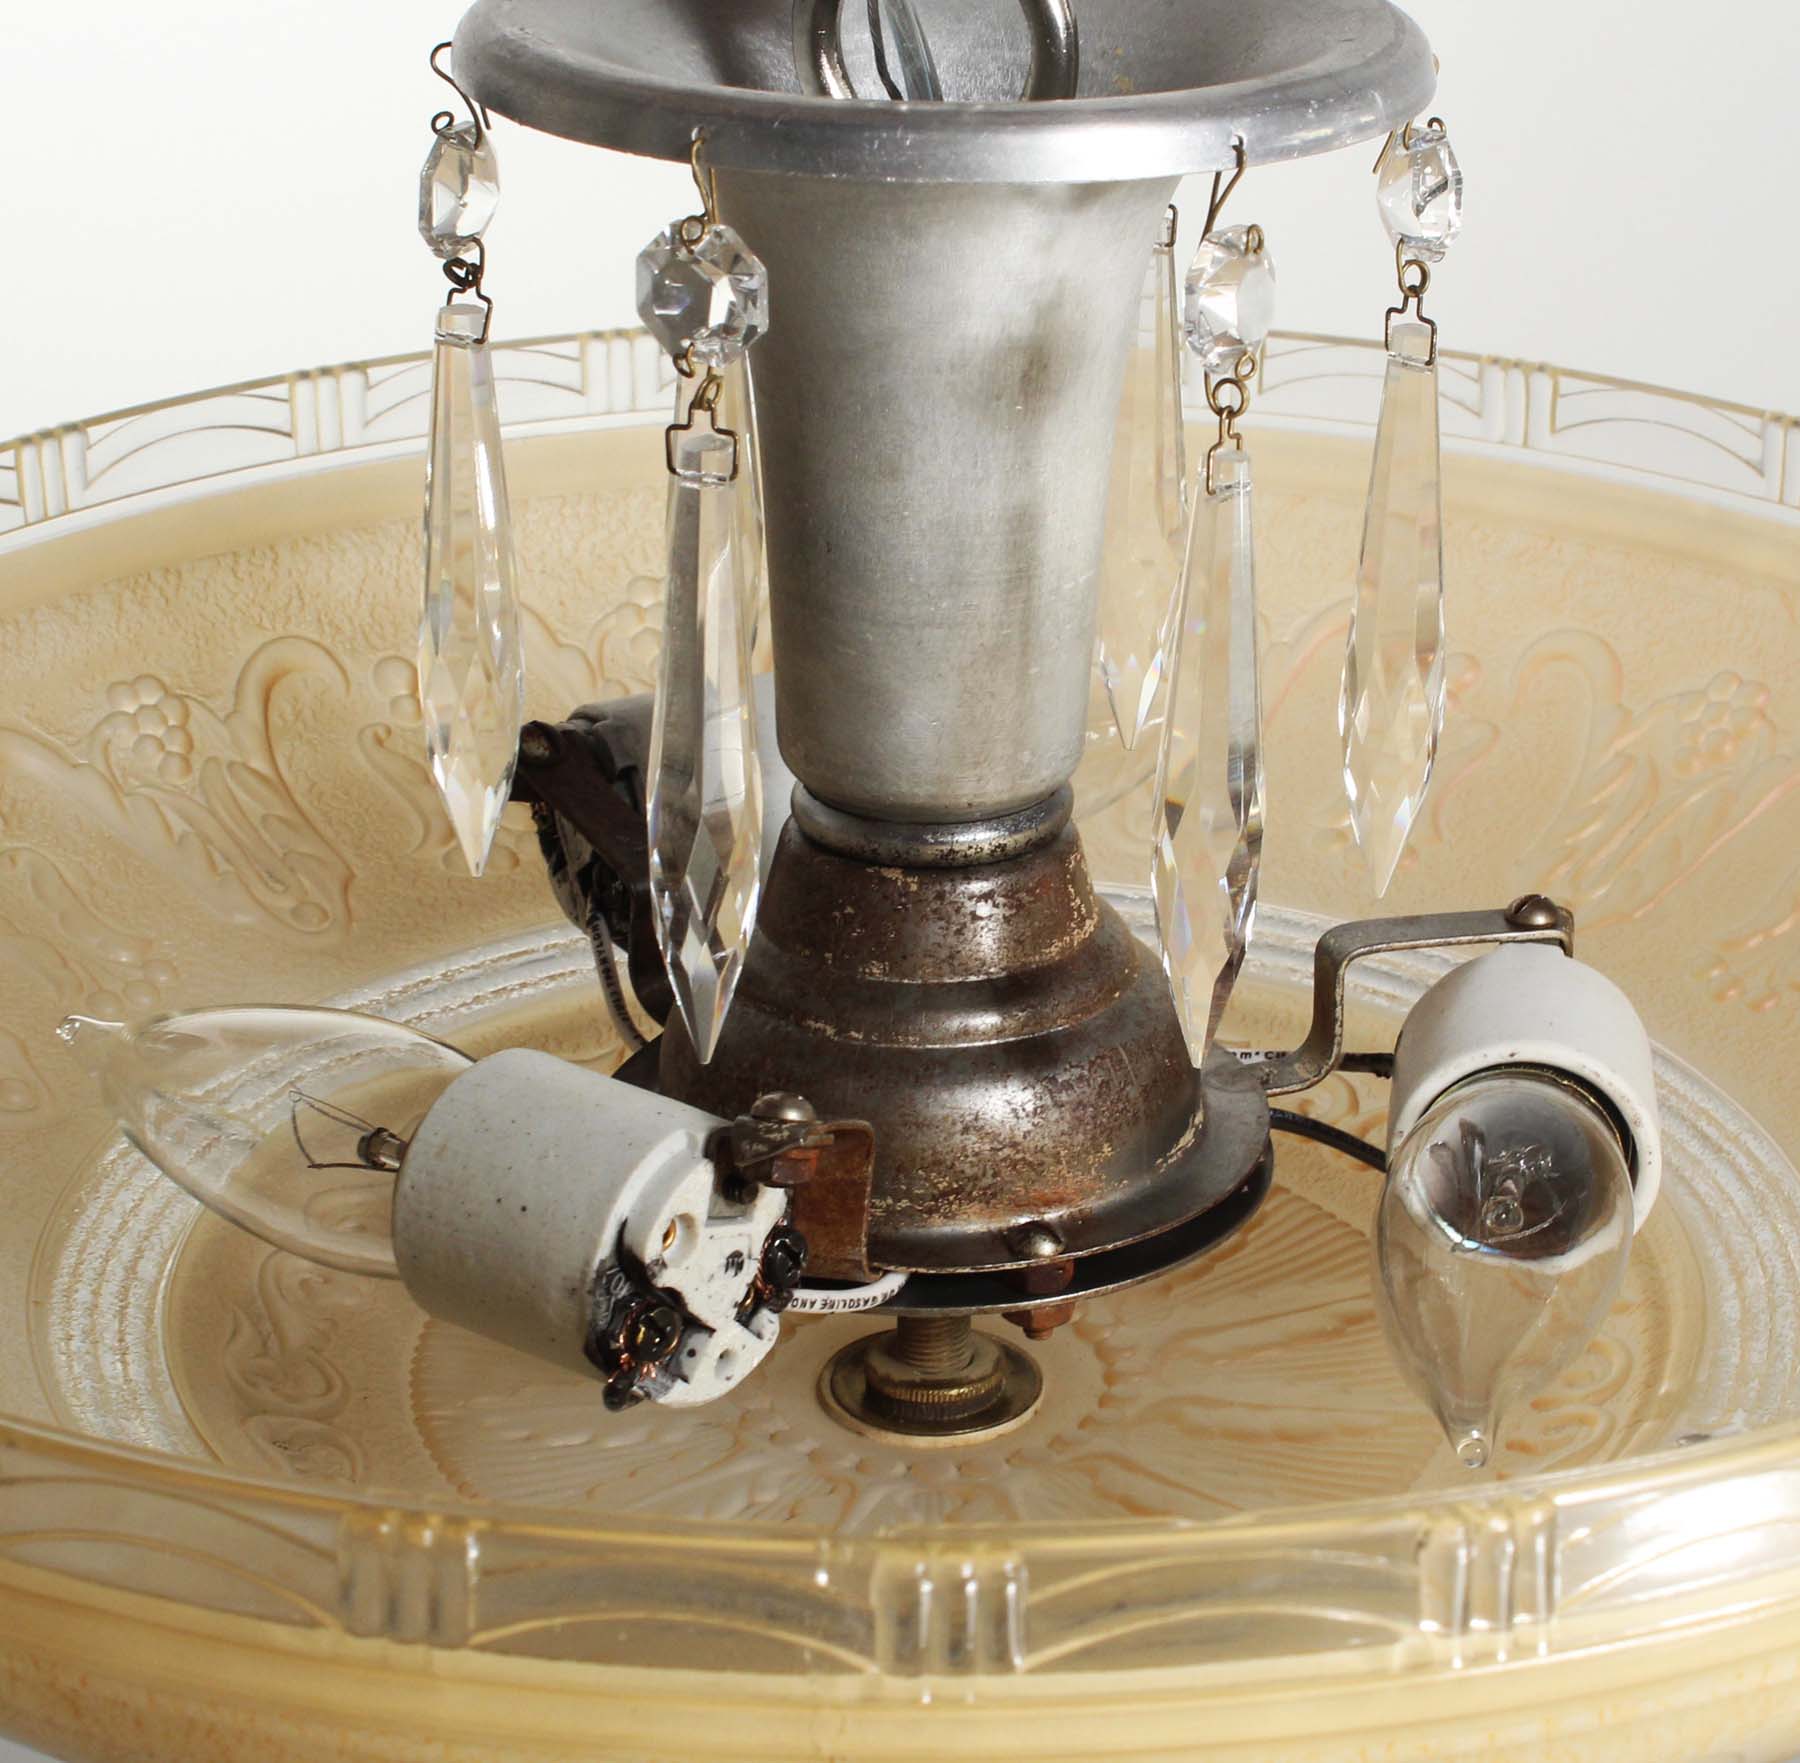 SOLD Pendant Light with Original Glass Shade, Vintage Lighting-68123